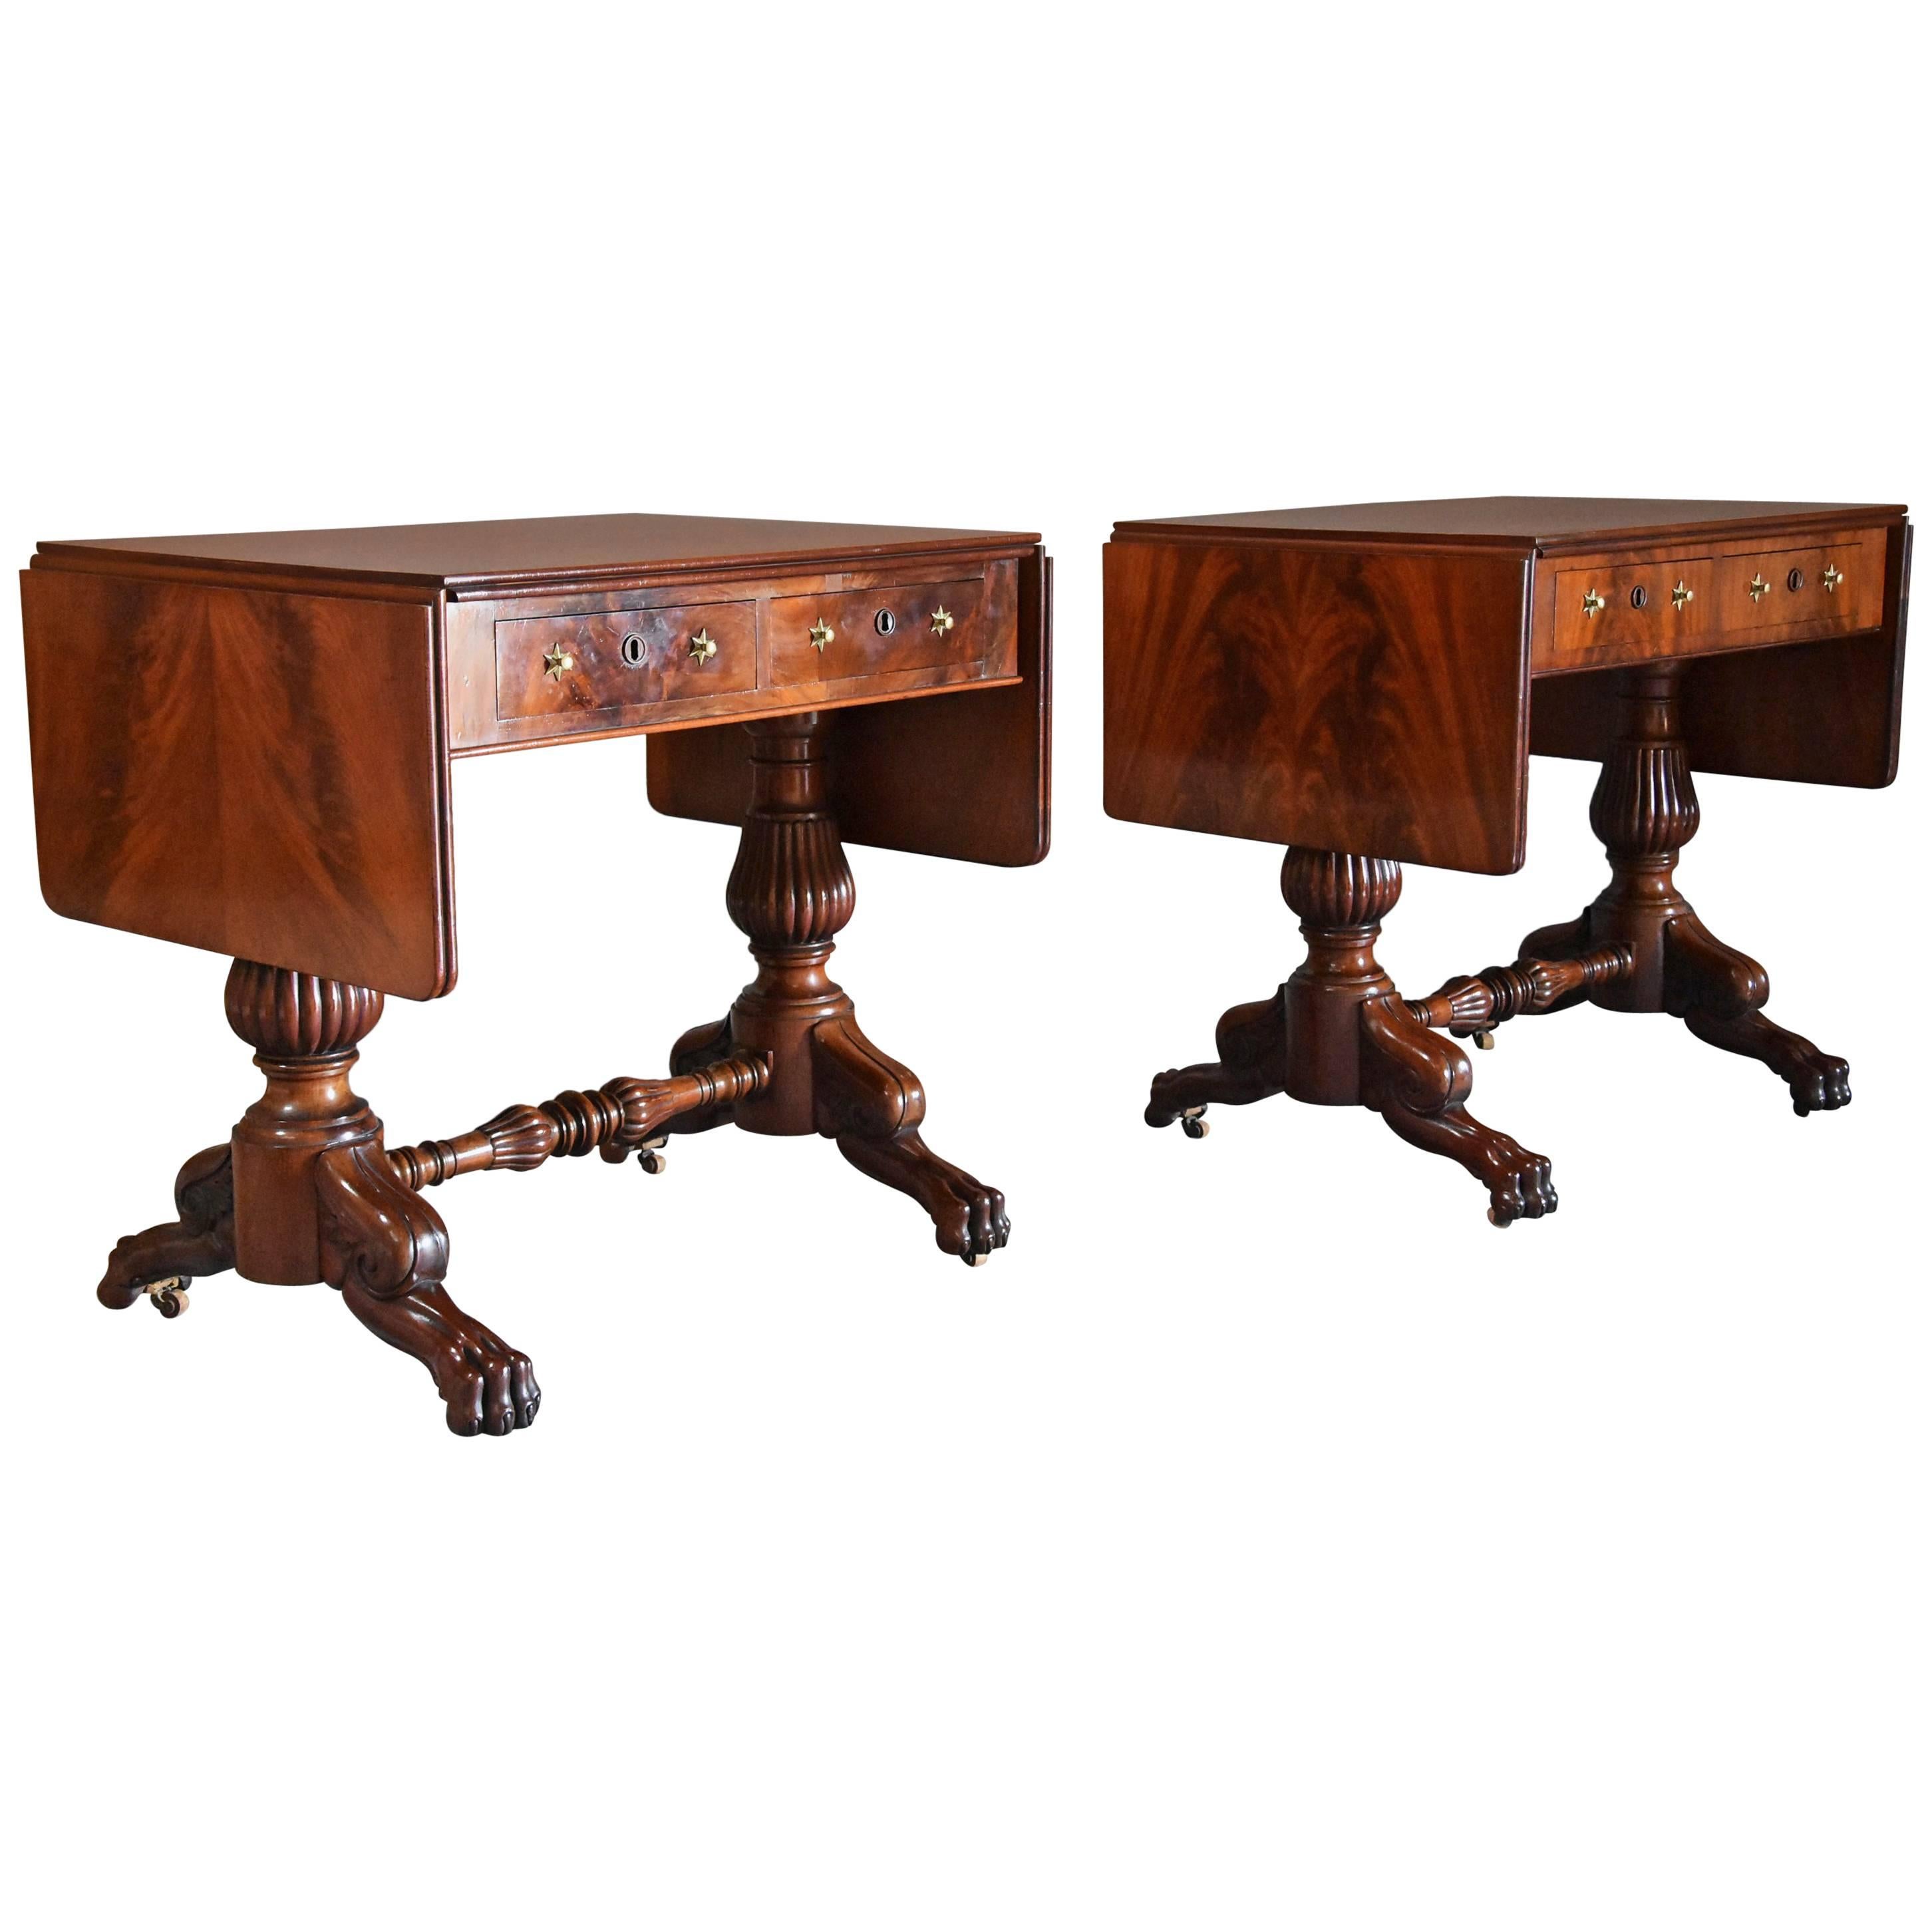 Superb Pair of Mid-19th Century French Mahogany Sofa Tables